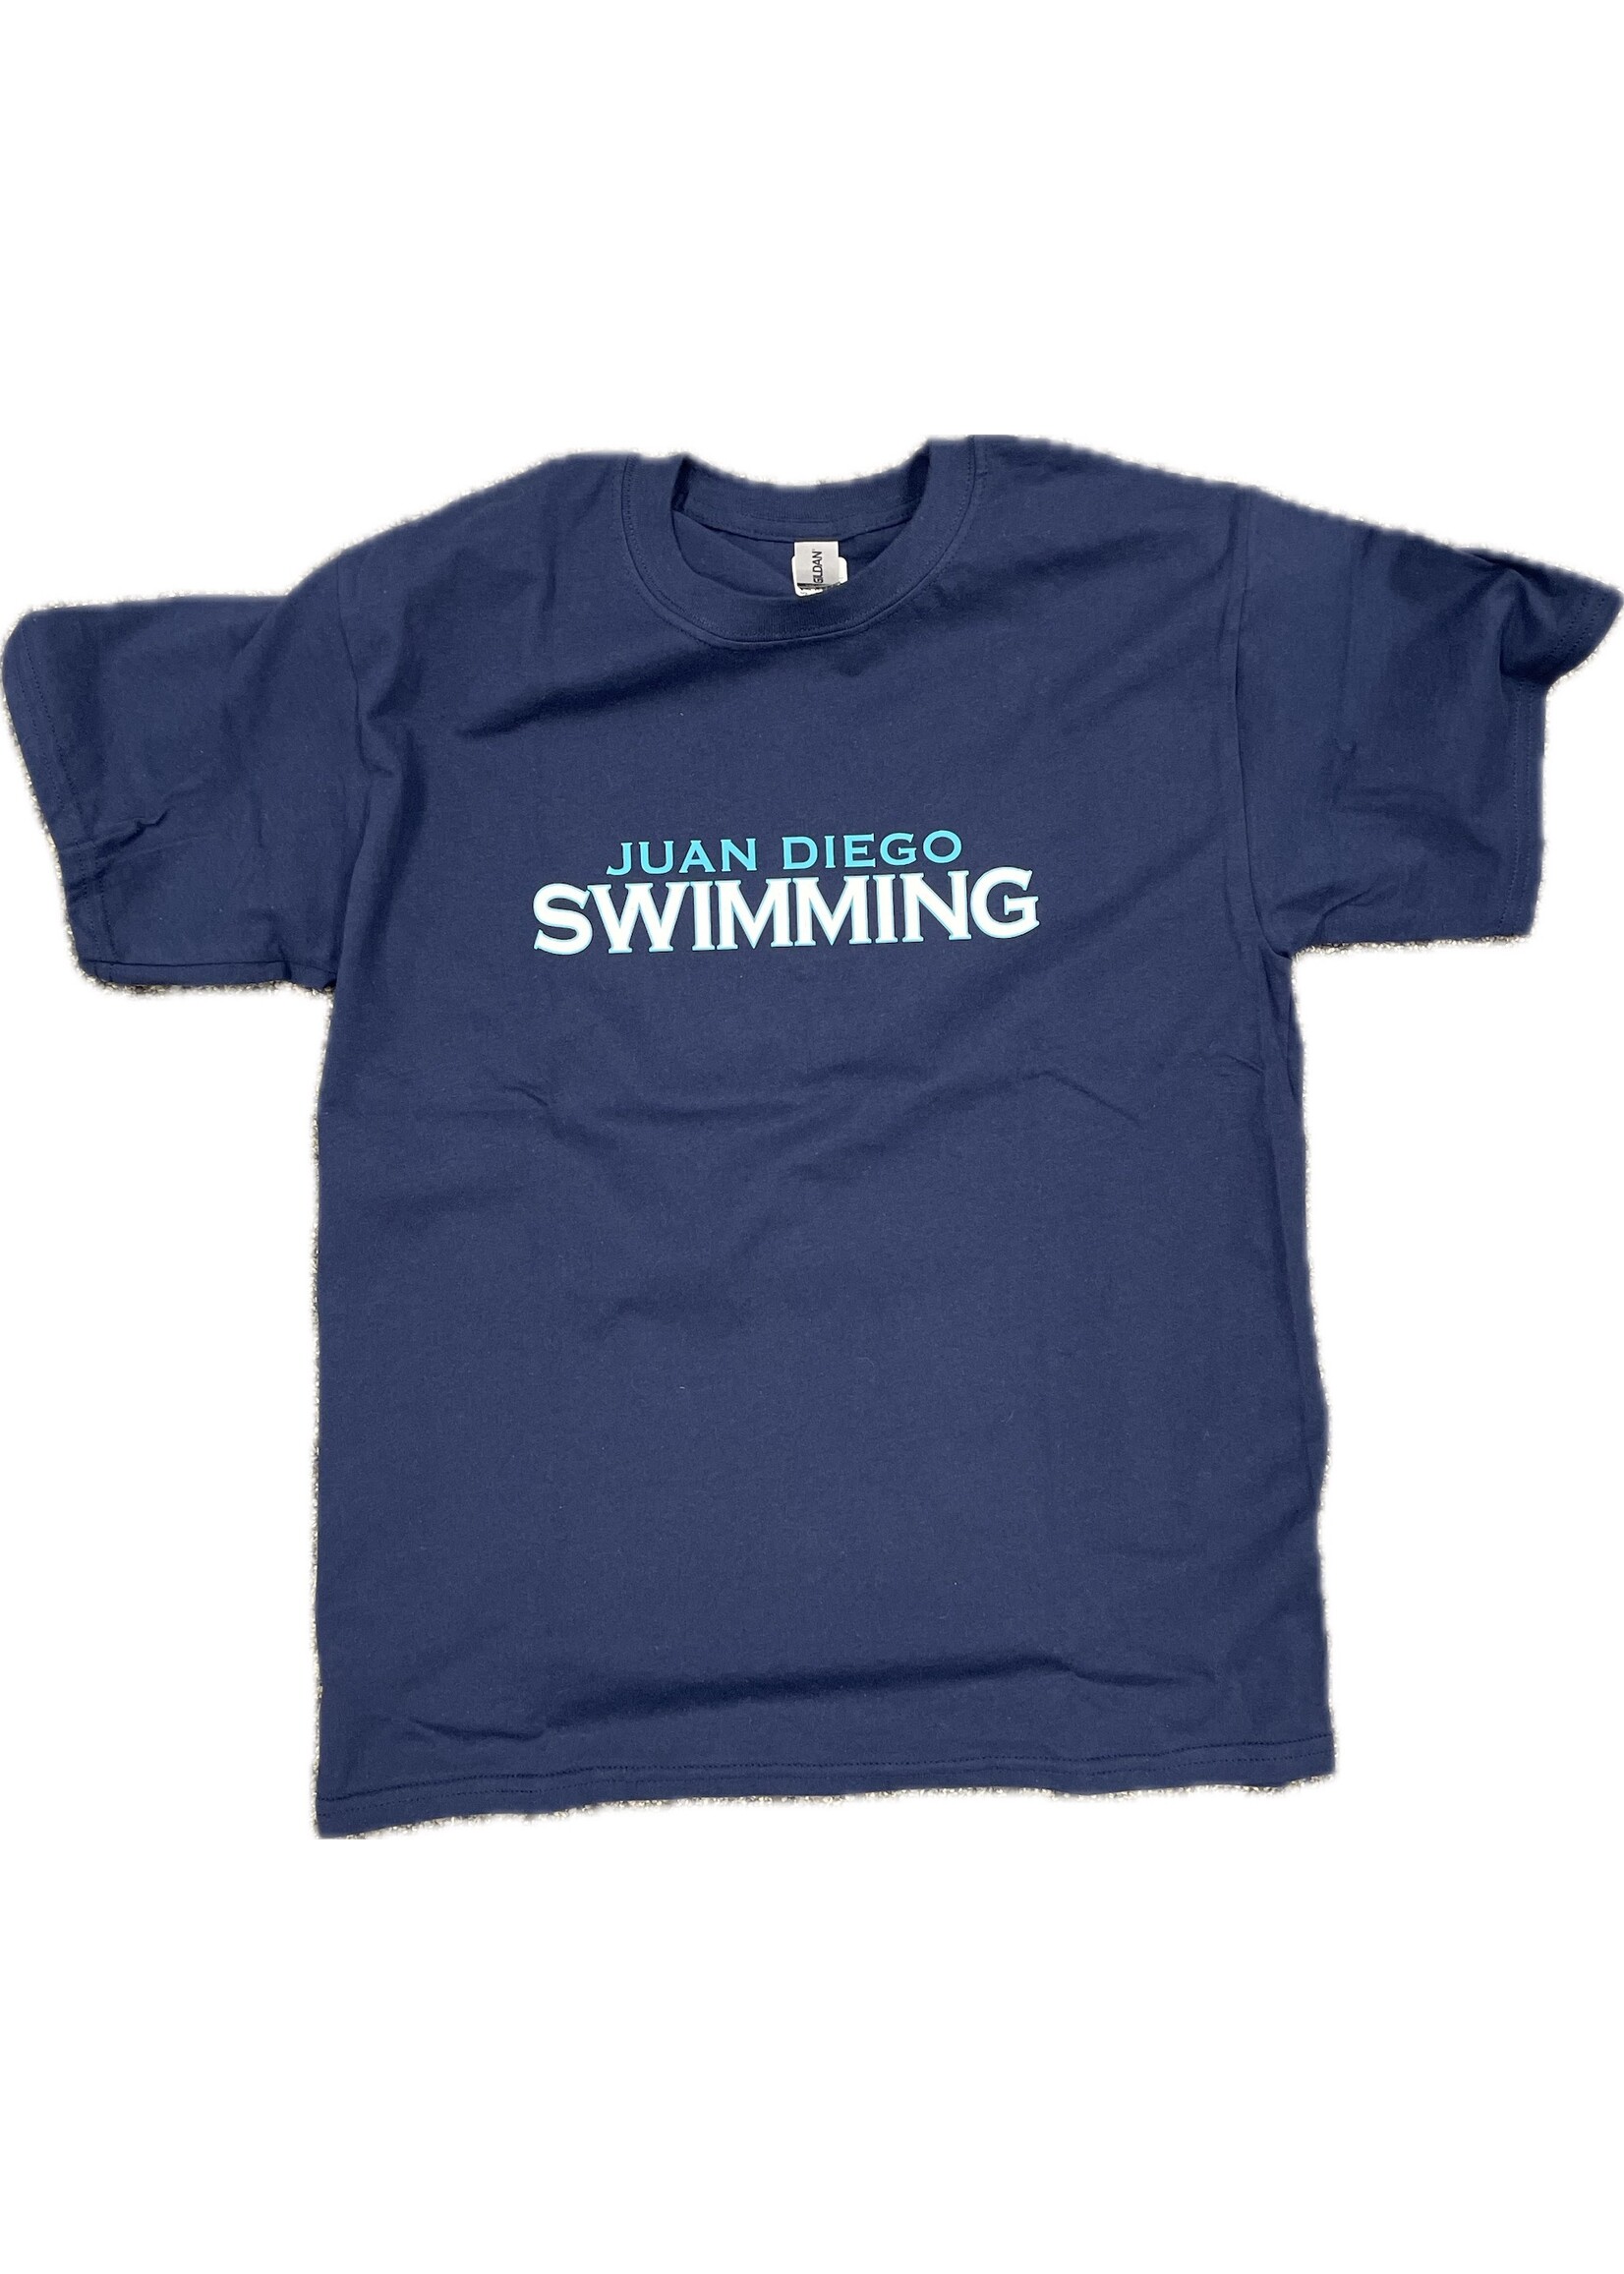 NON-UNIFORM Swimming, Juan Diego Swimming Custom Order  Unisex s/s t-shirt